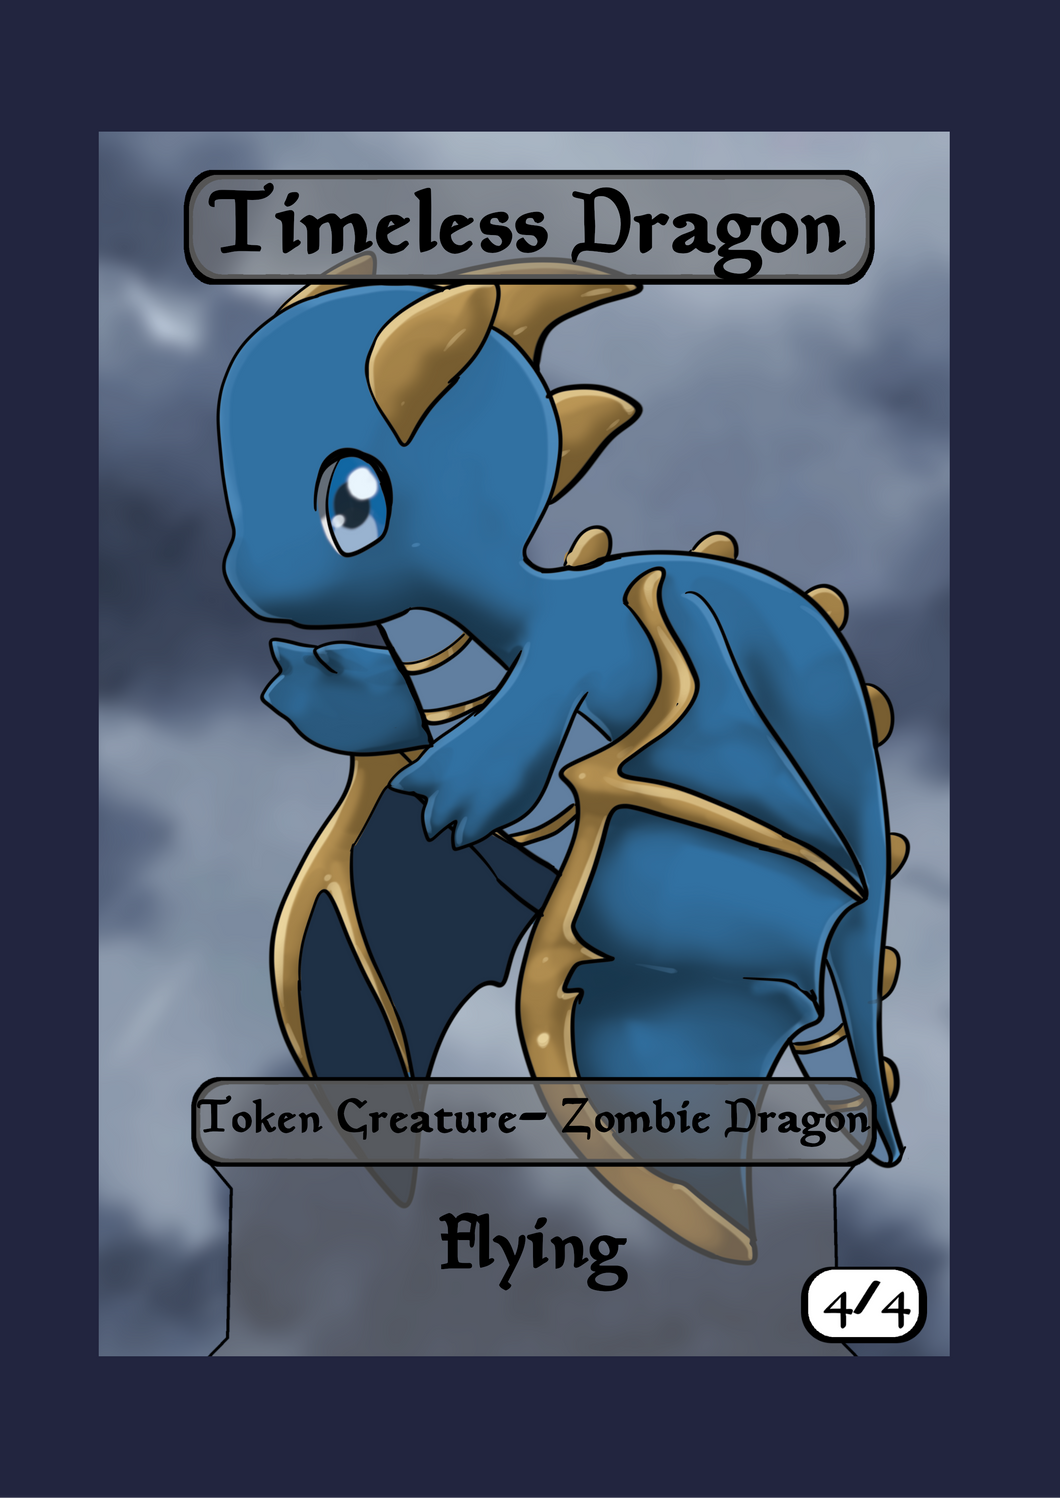 Timeless Dragon 4/4 w/ Flying Token